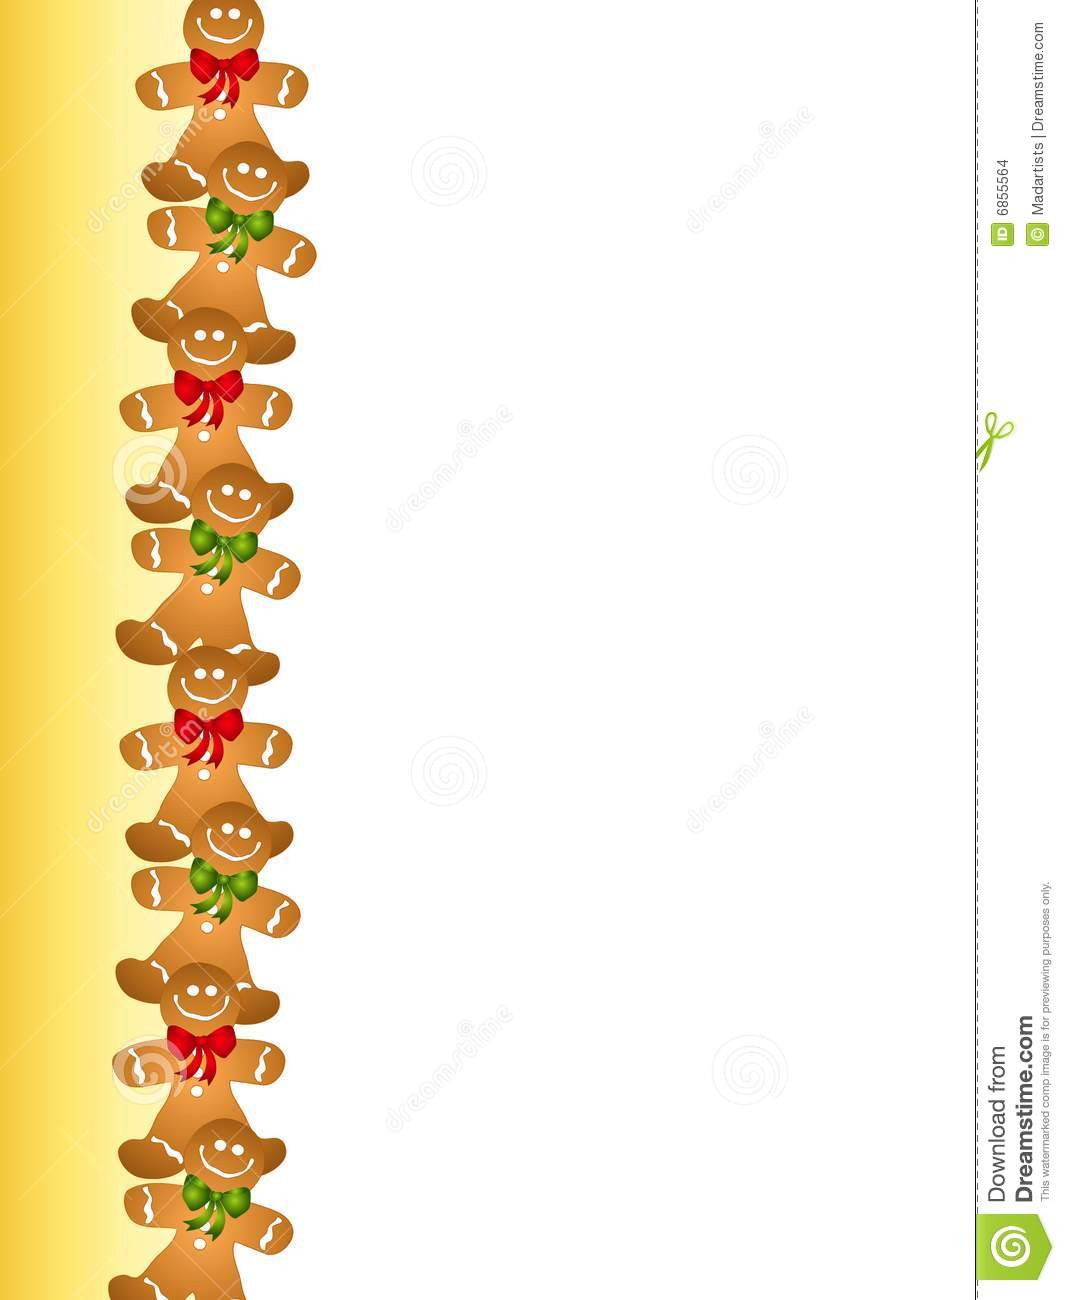 Gingerbread Man Border stock illustration. Illustration of graphics.